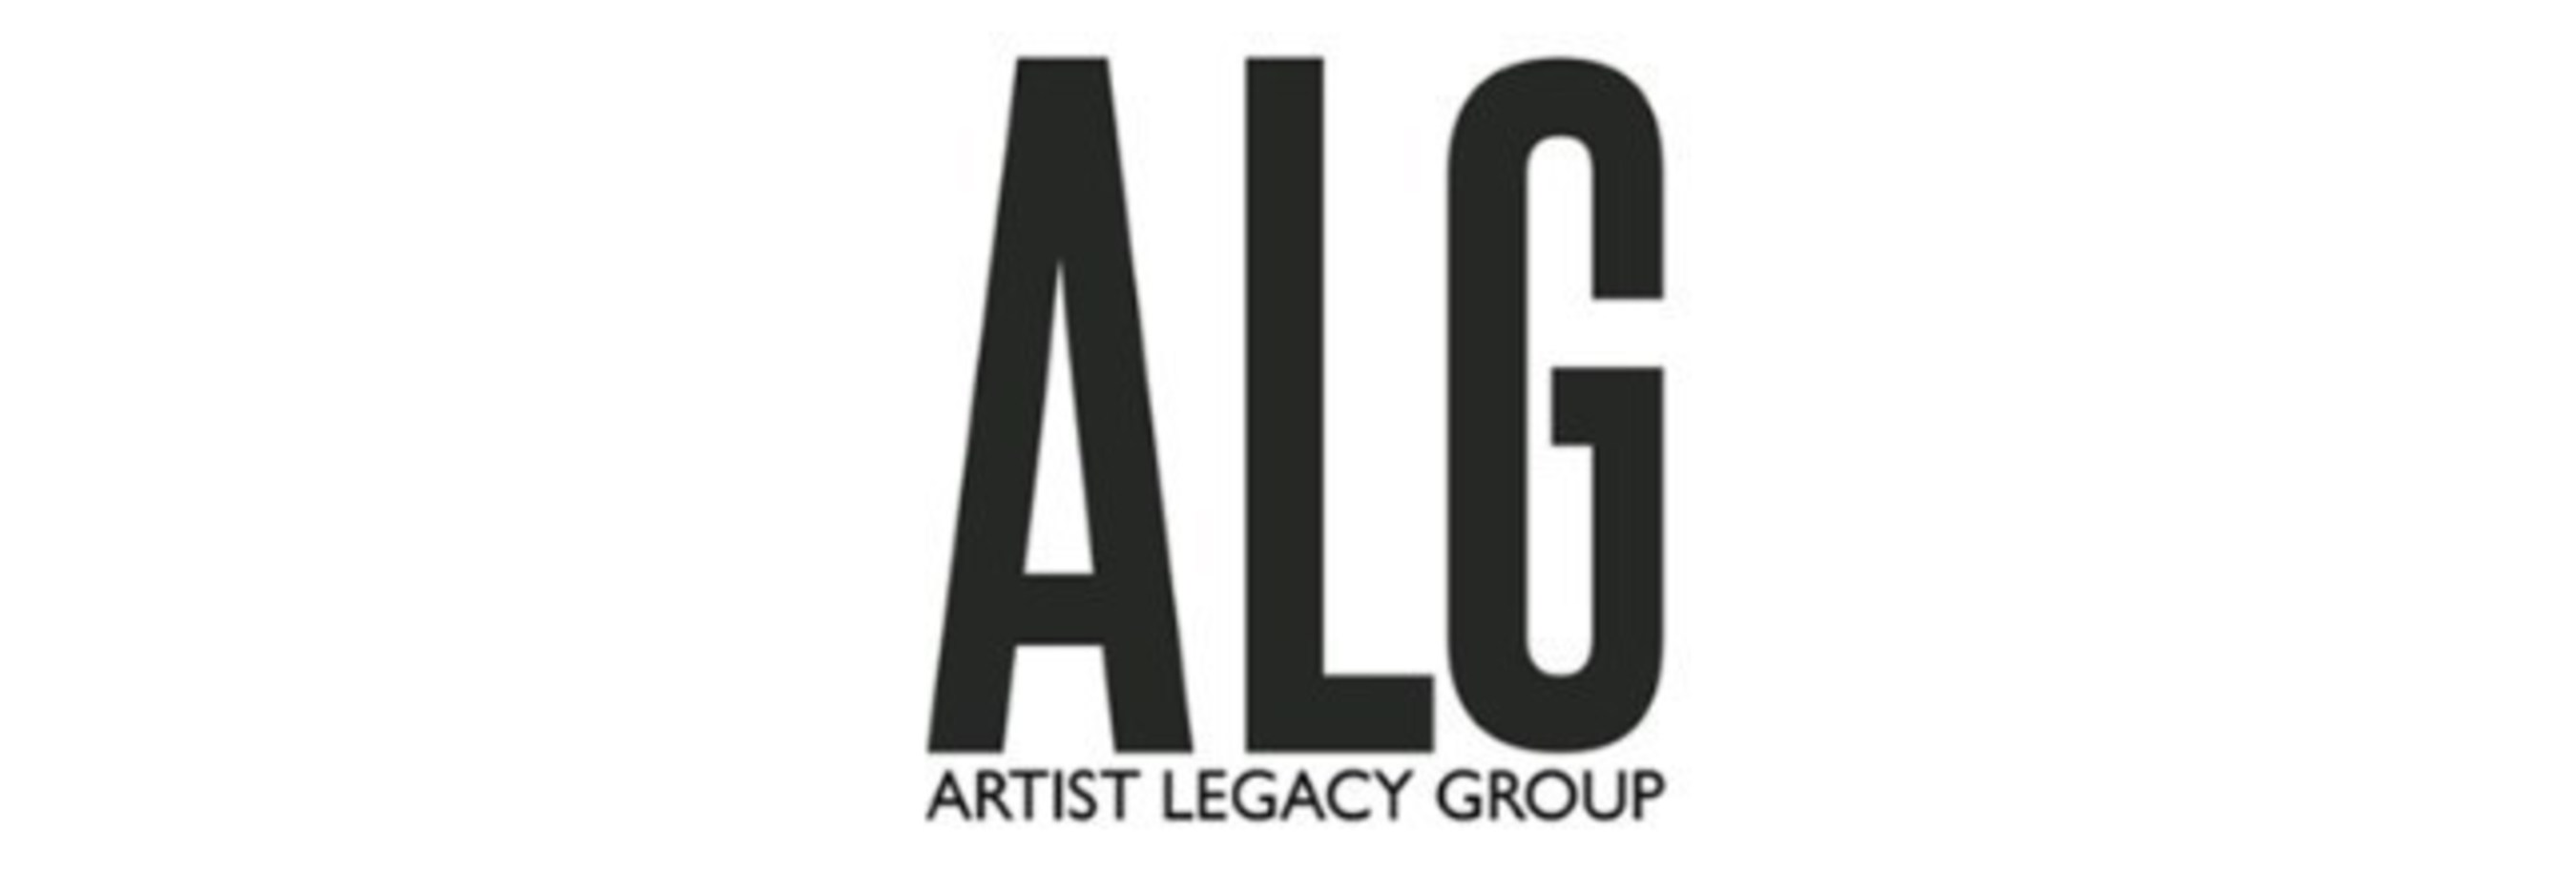 Artist Legacy Group